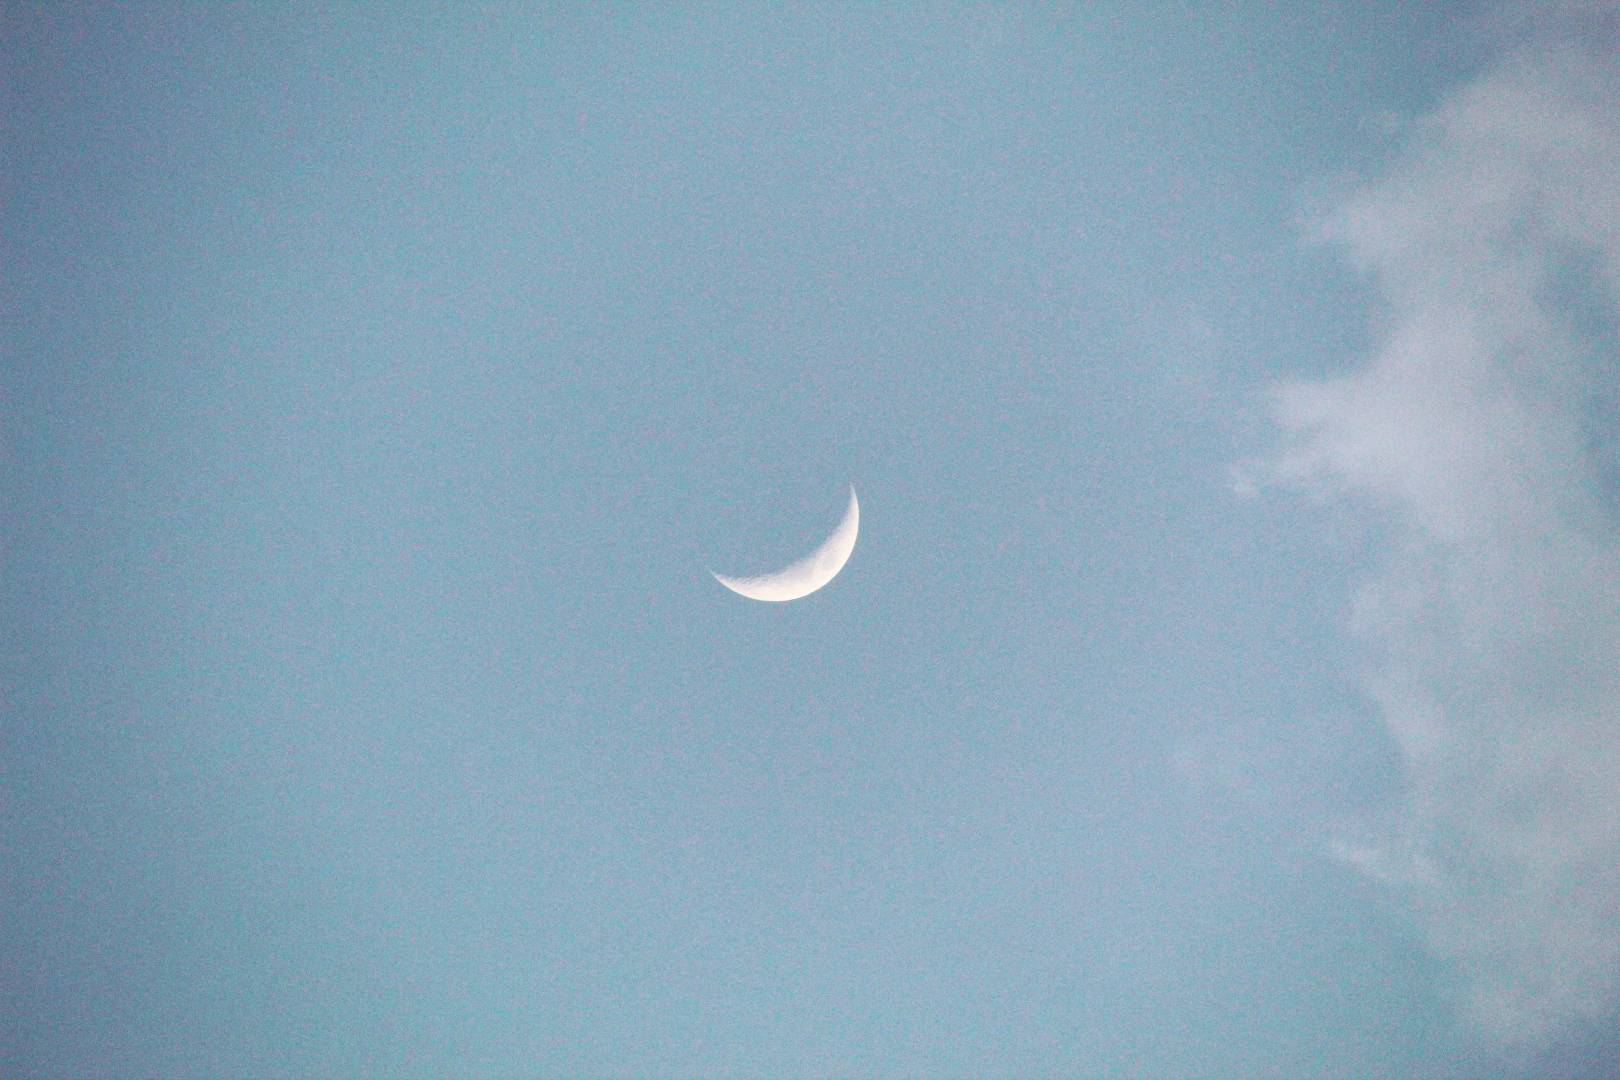 Moon in the sky